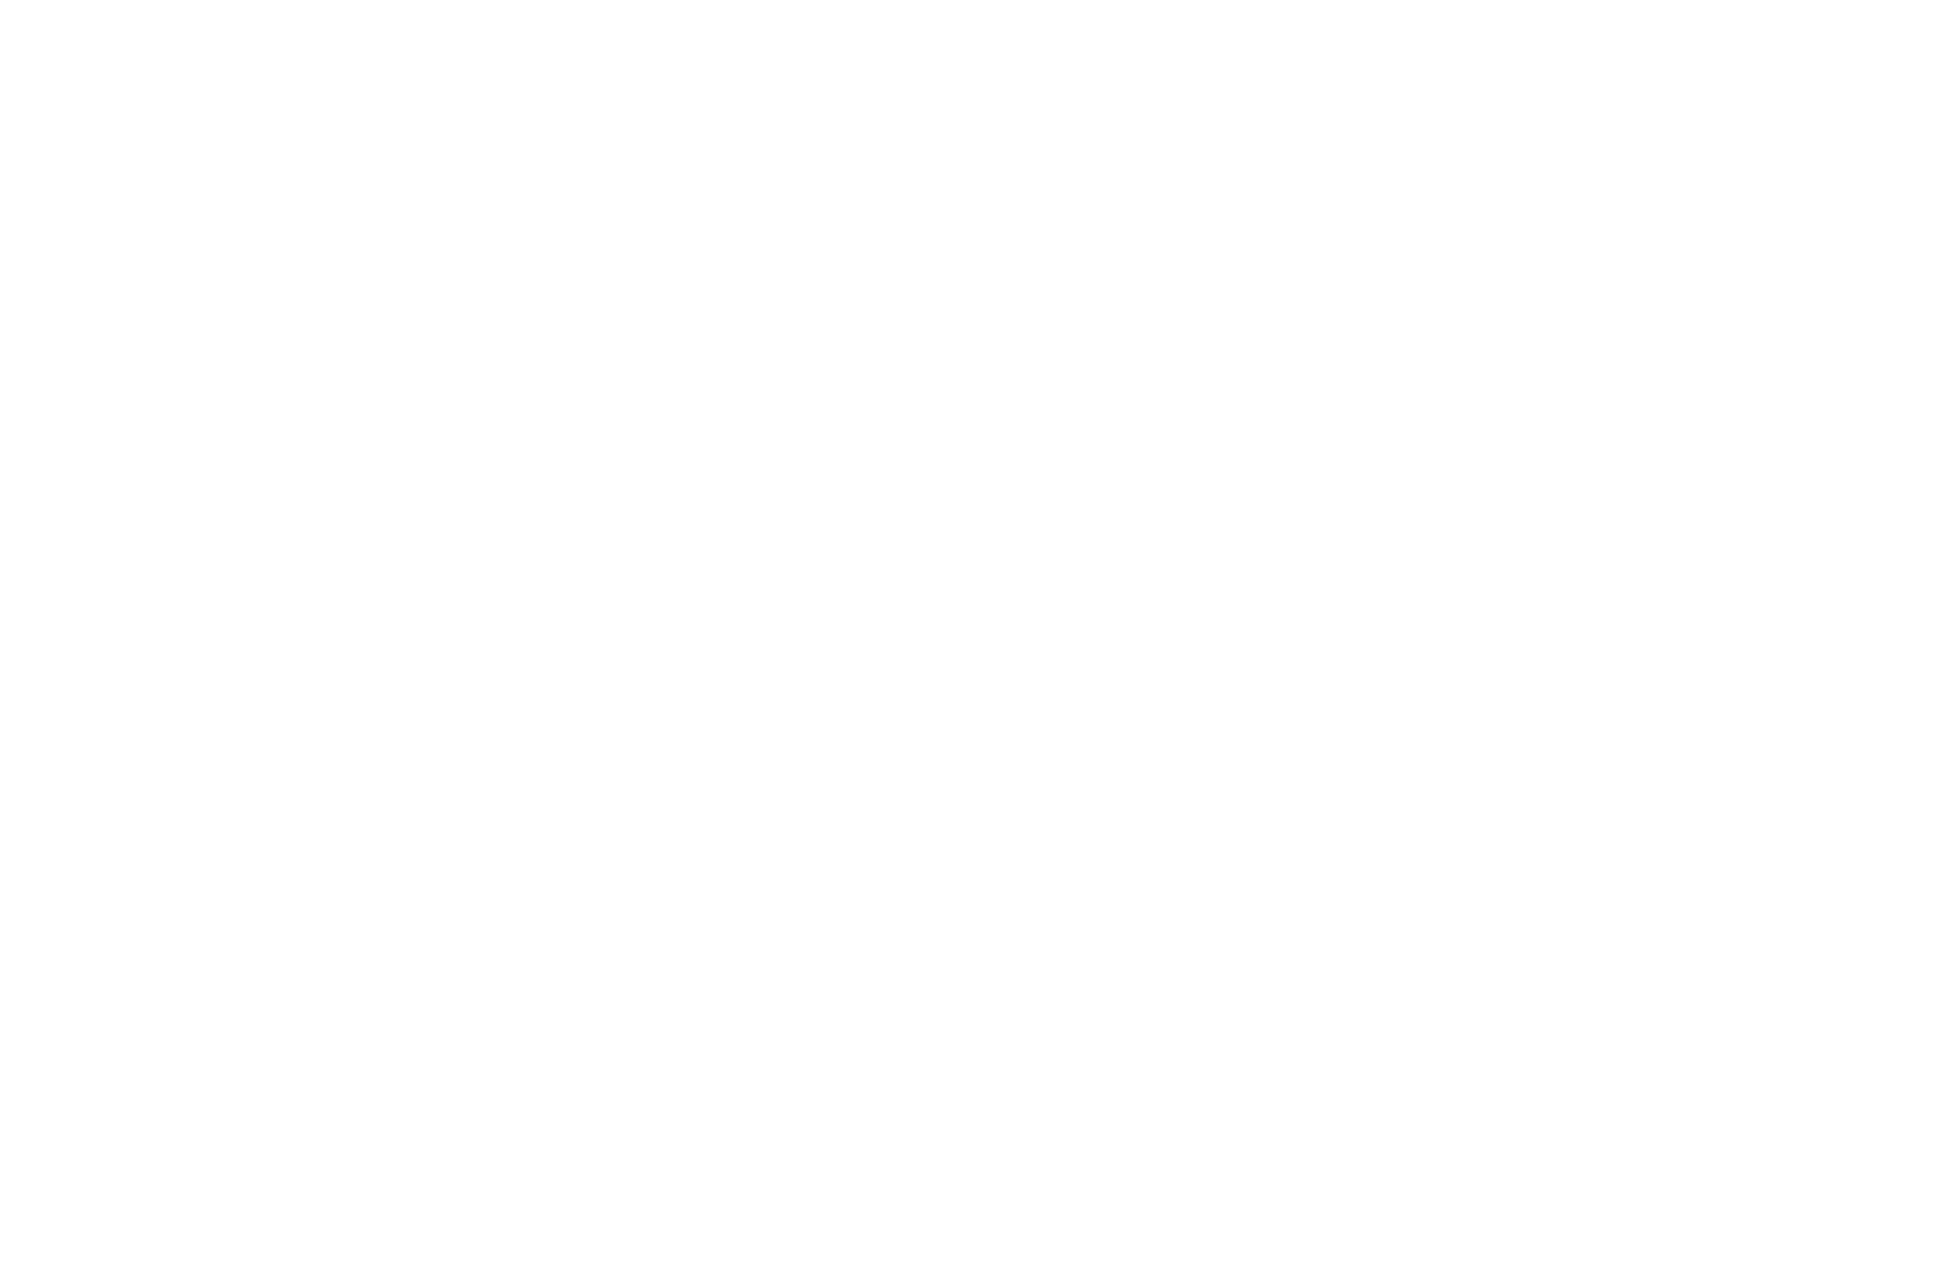 Best Experimental Film